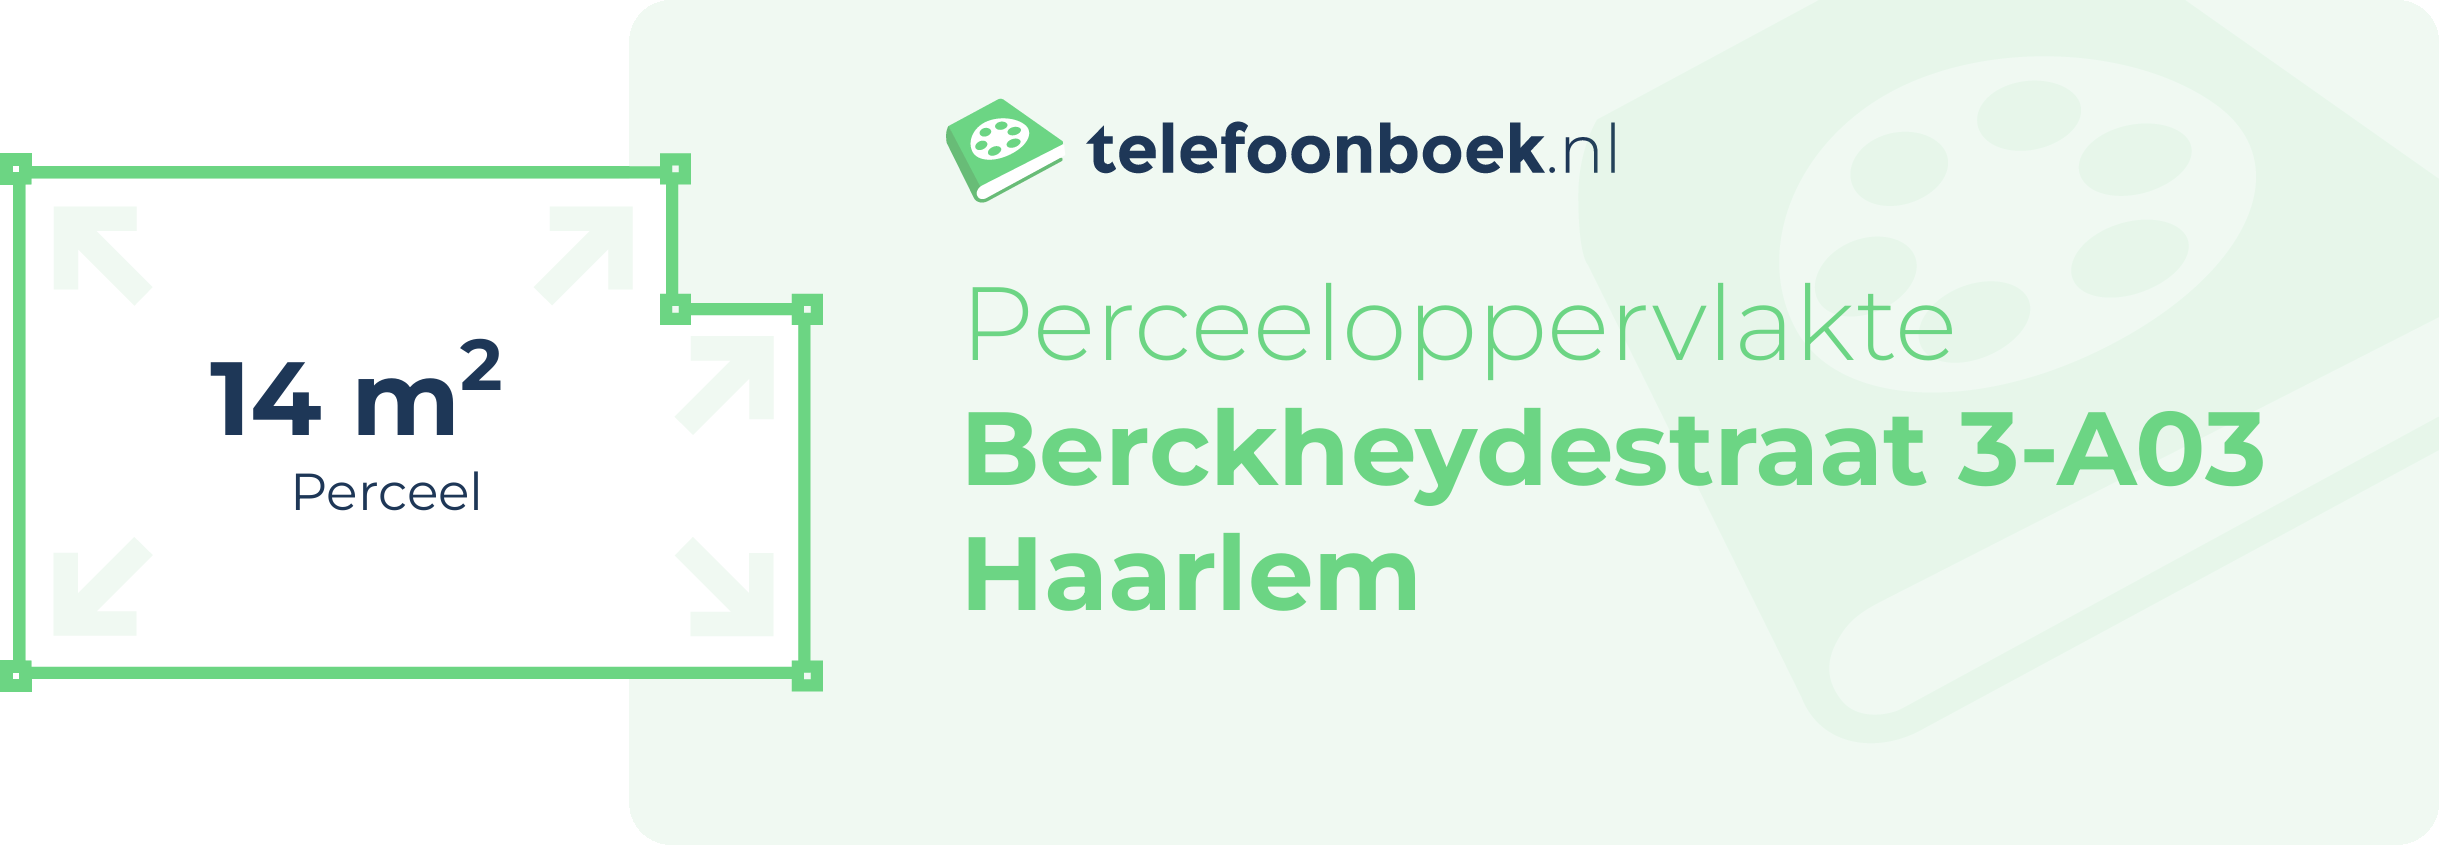 Perceeloppervlakte Berckheydestraat 3-A03 Haarlem